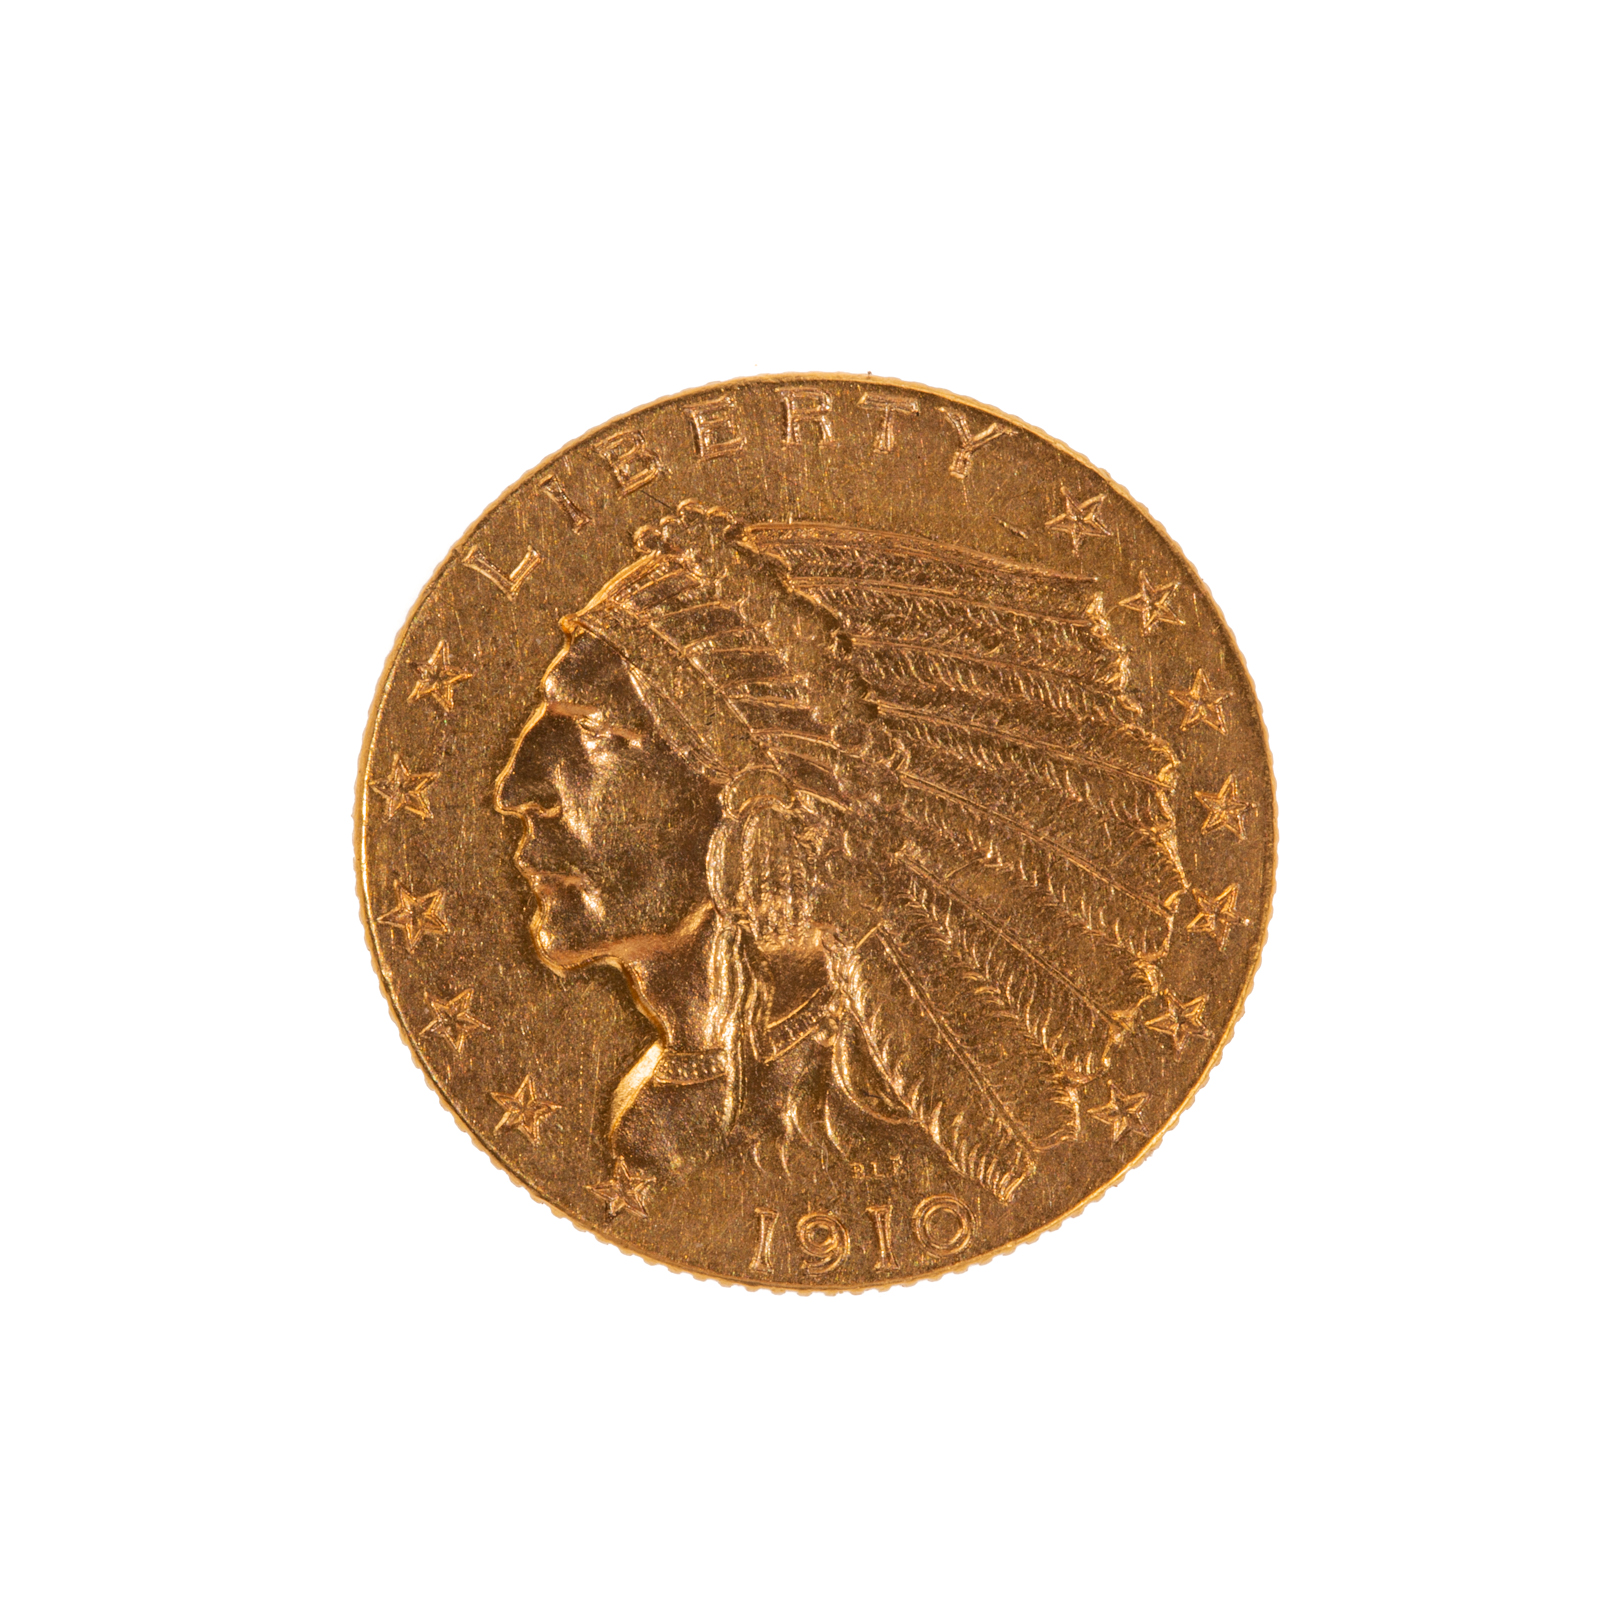 1910 $2.50 GOLD INDIAN QUARTER